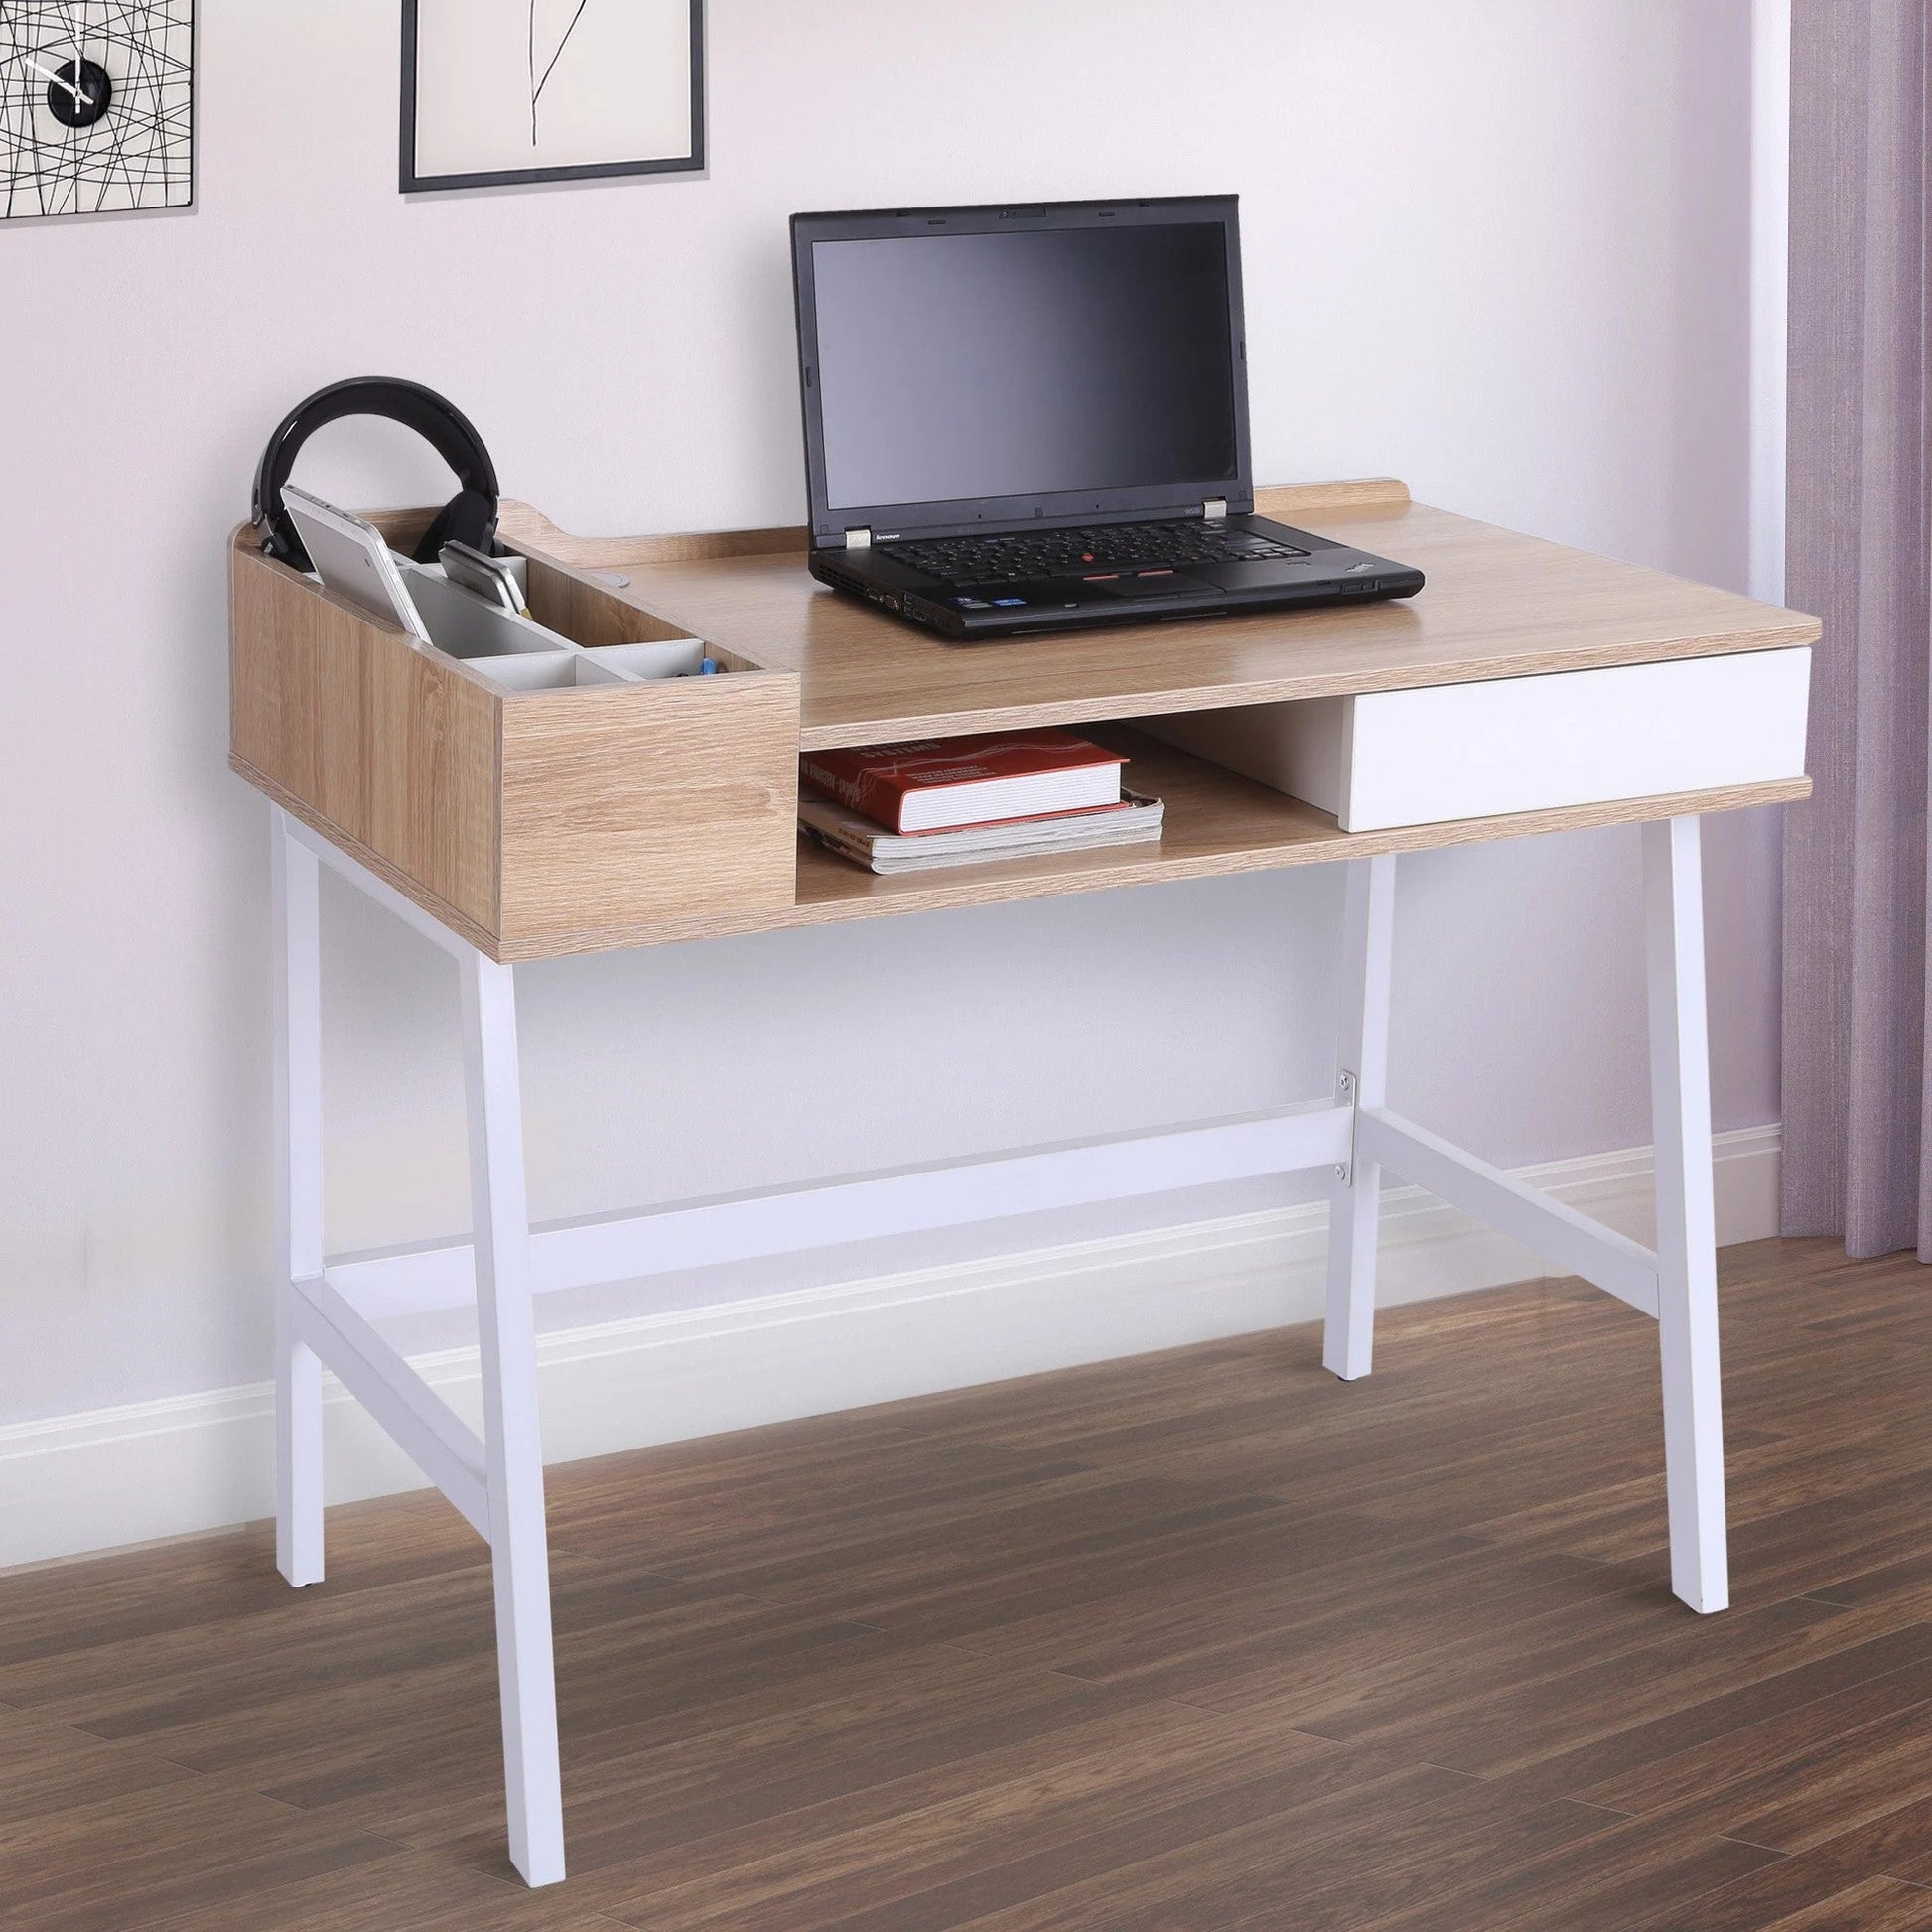 ProperAV MDF Computer Desk - Oak/White - maplin.co.uk